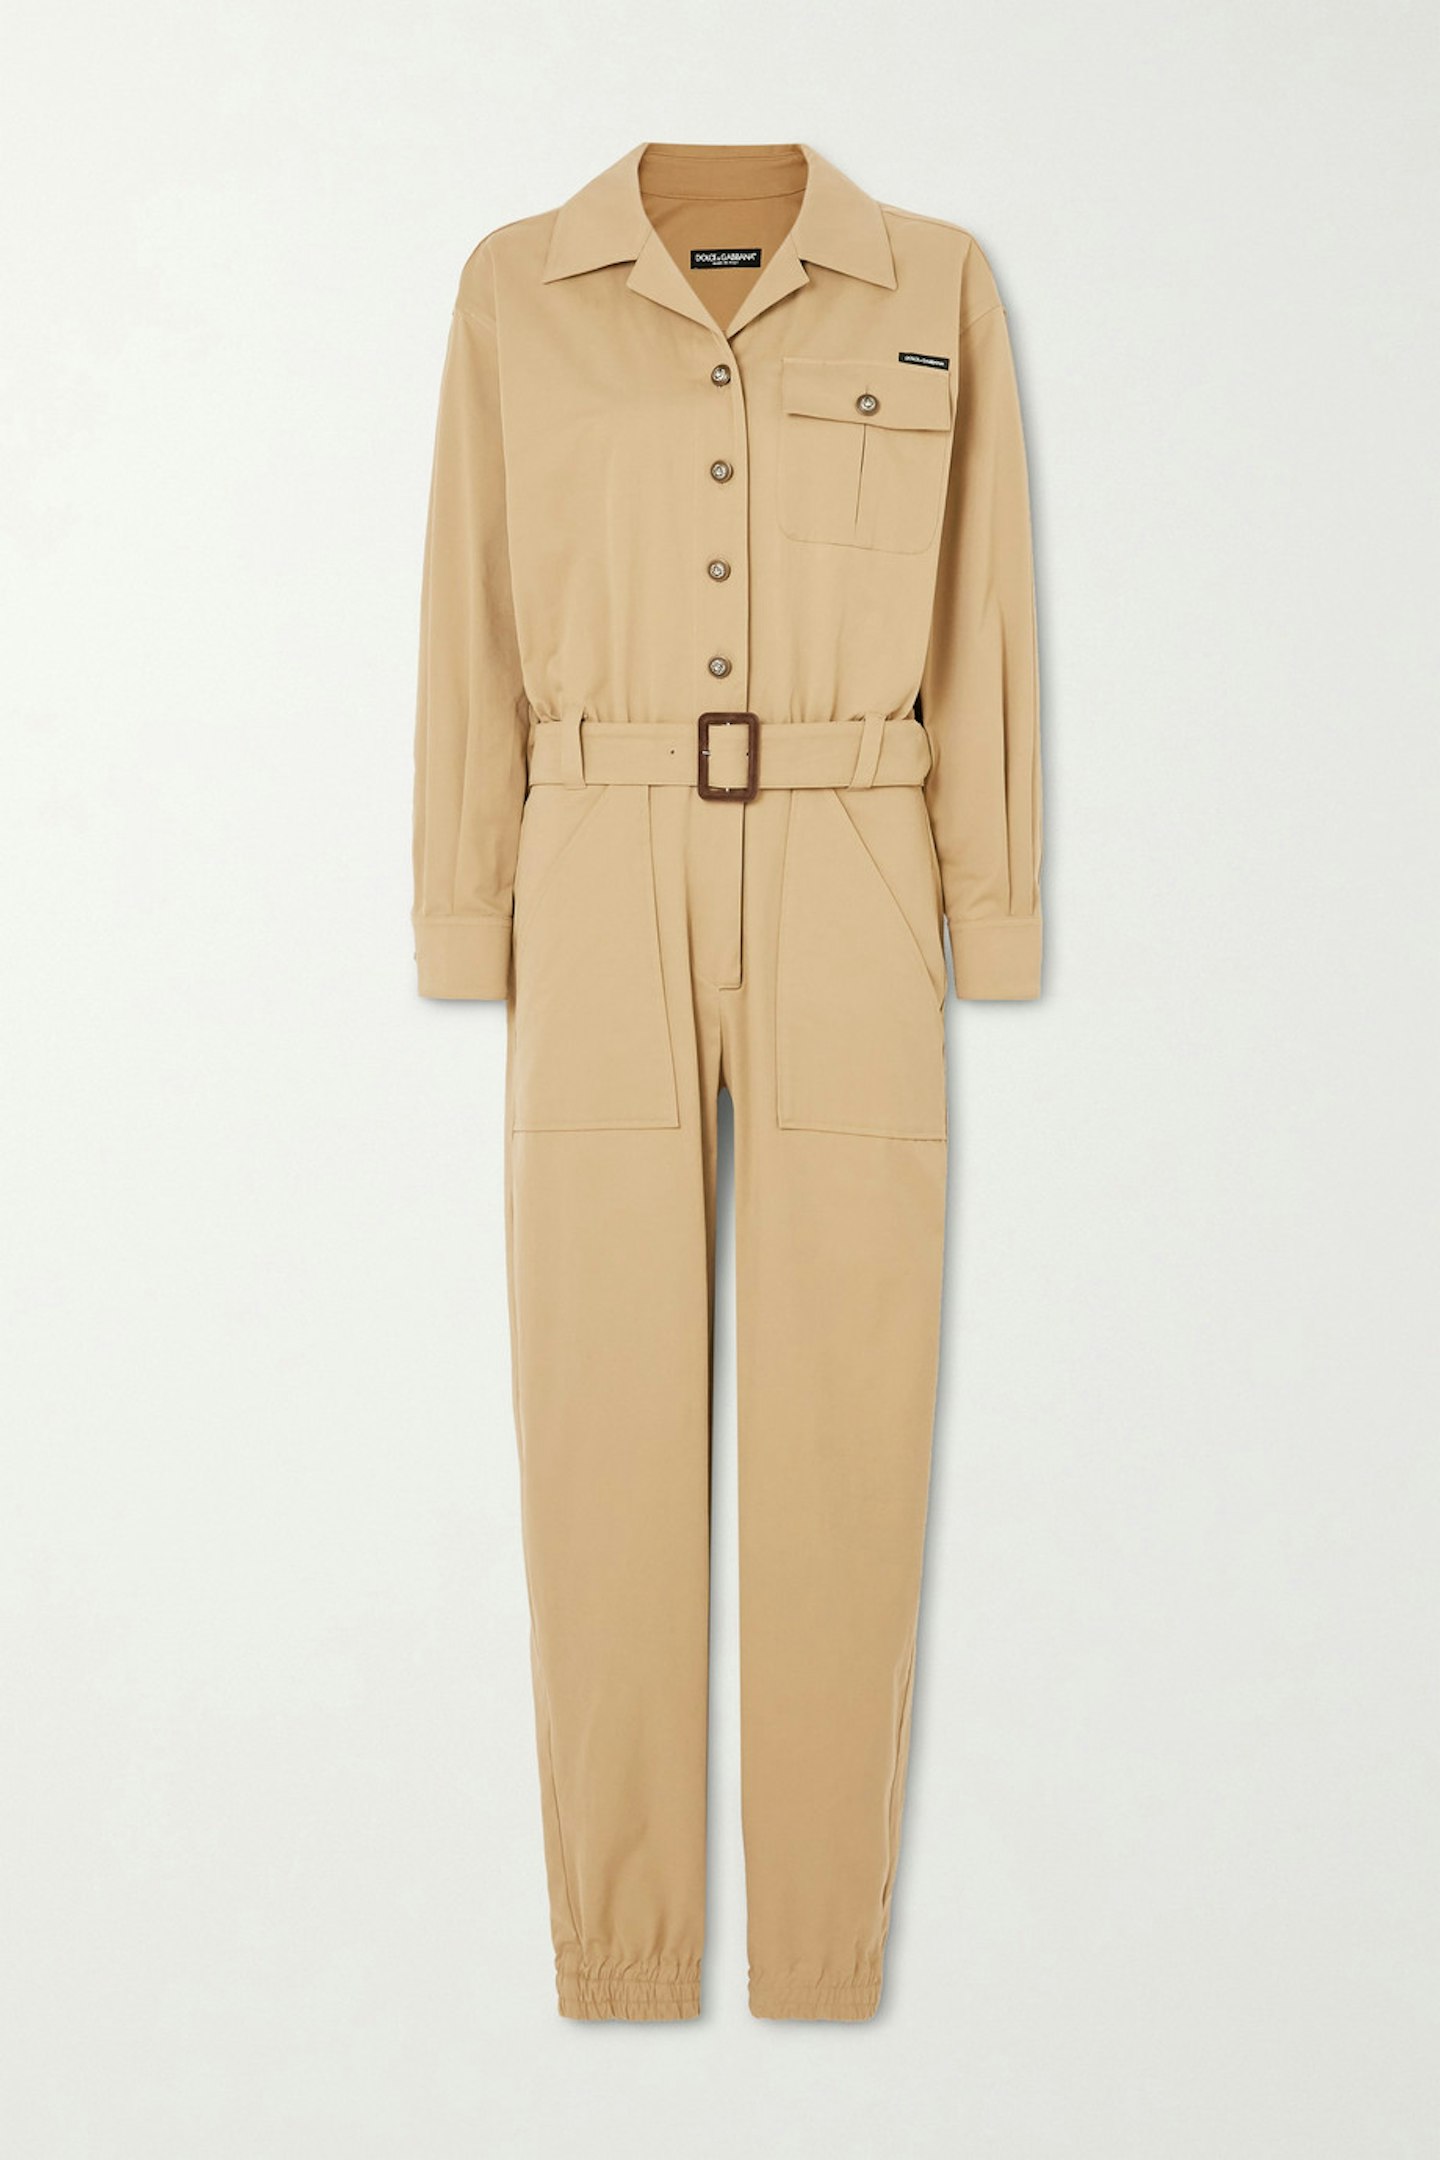 Boiler Suit, £1400, Dolce & Gabana at Net-a-Porter